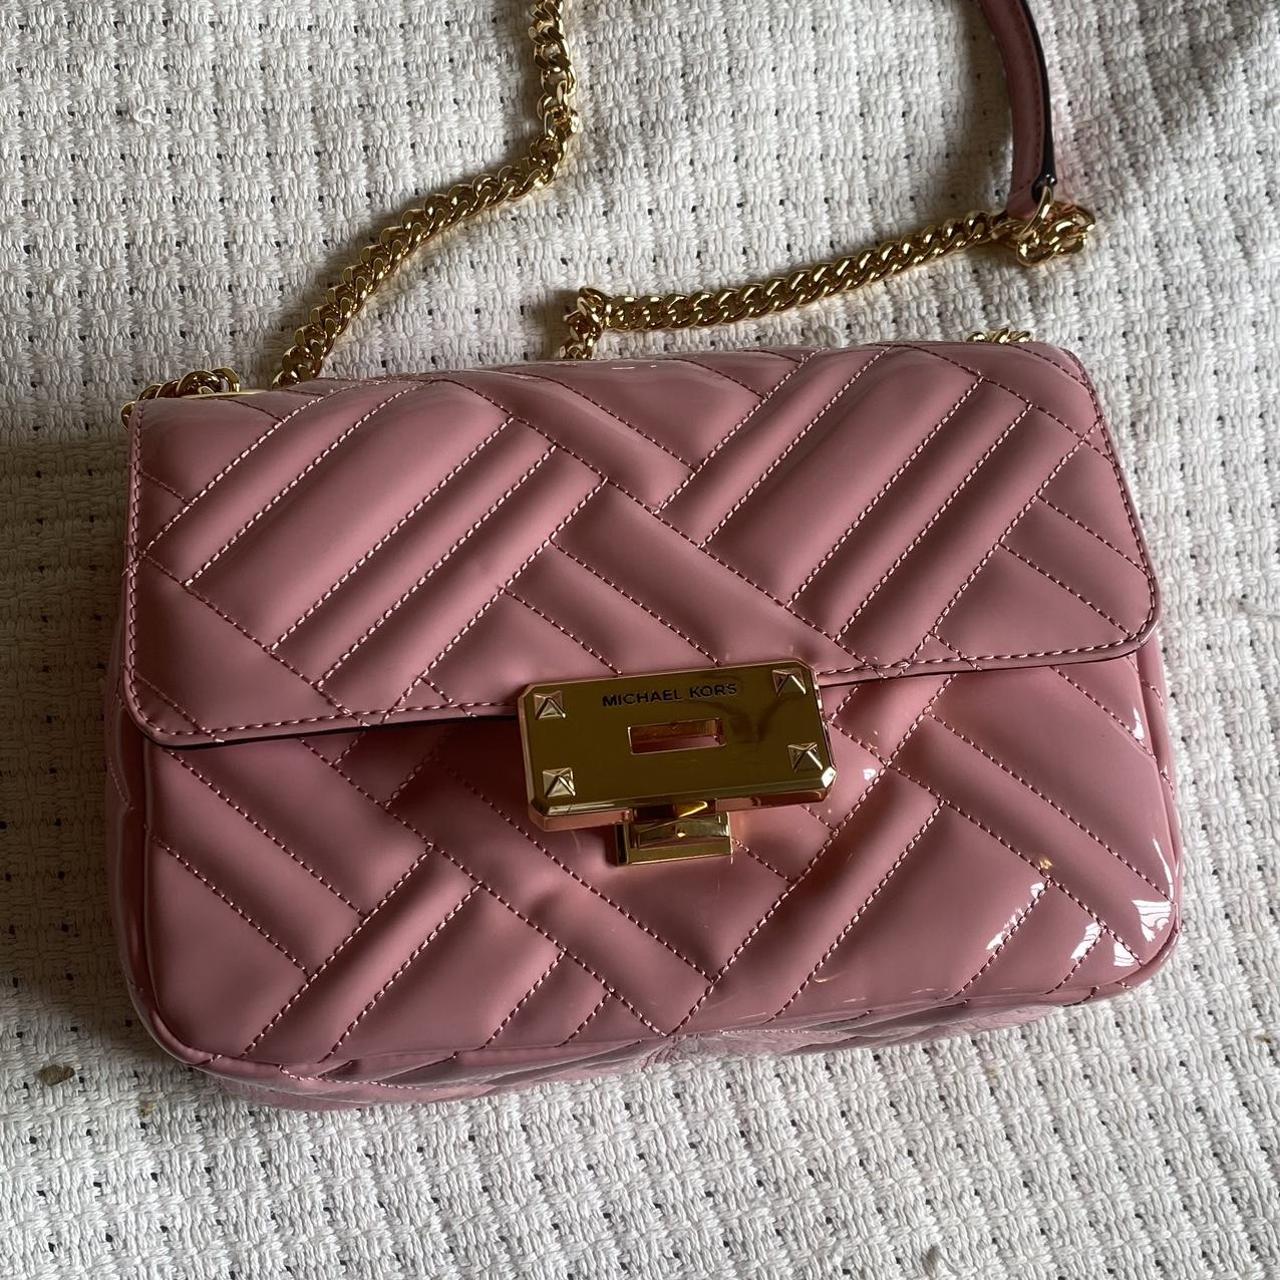 Stylish Light Pink Tote Bag by Michael Kors